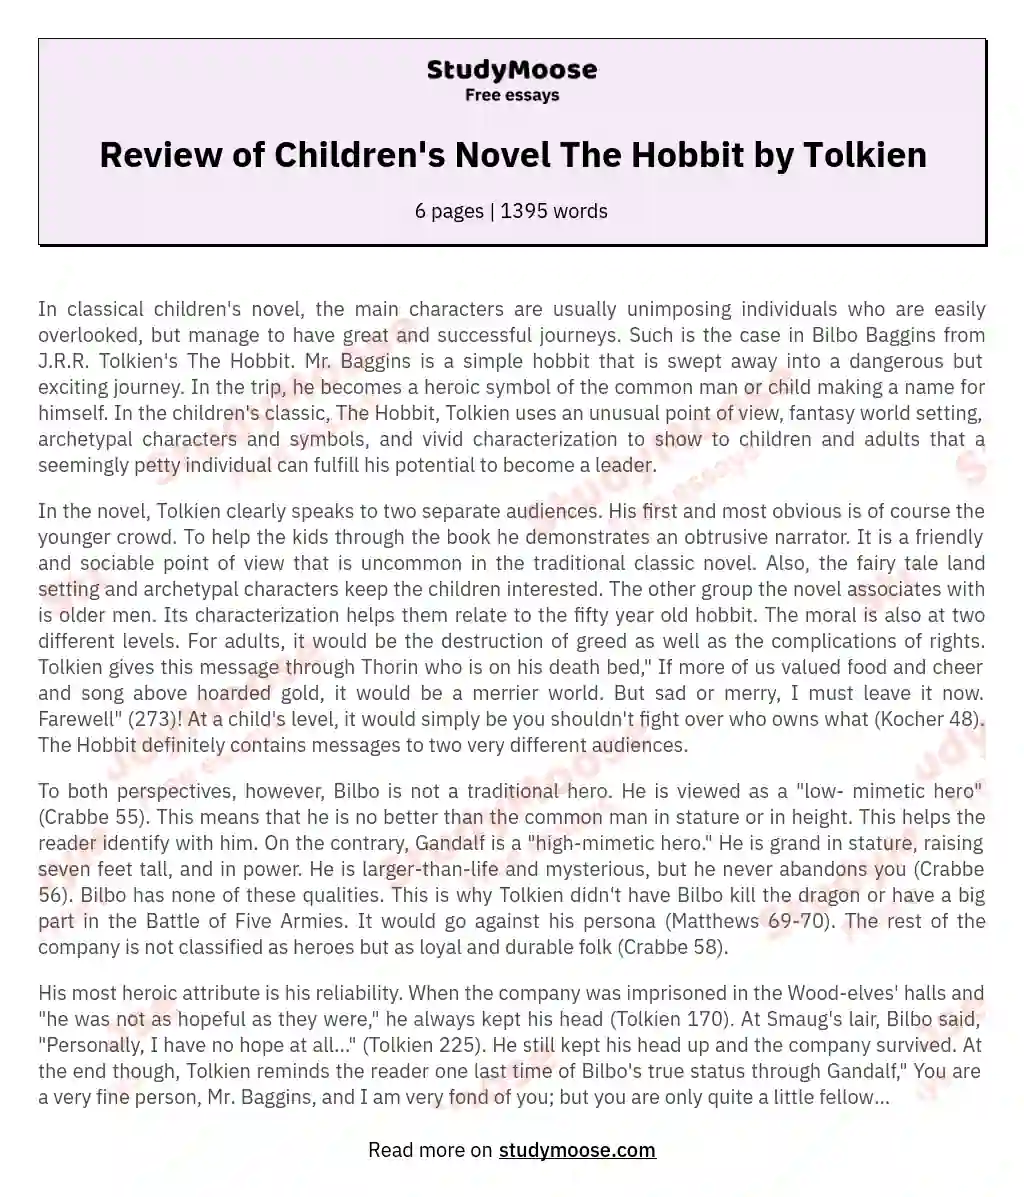 Review of Children's Novel The Hobbit by Tolkien essay